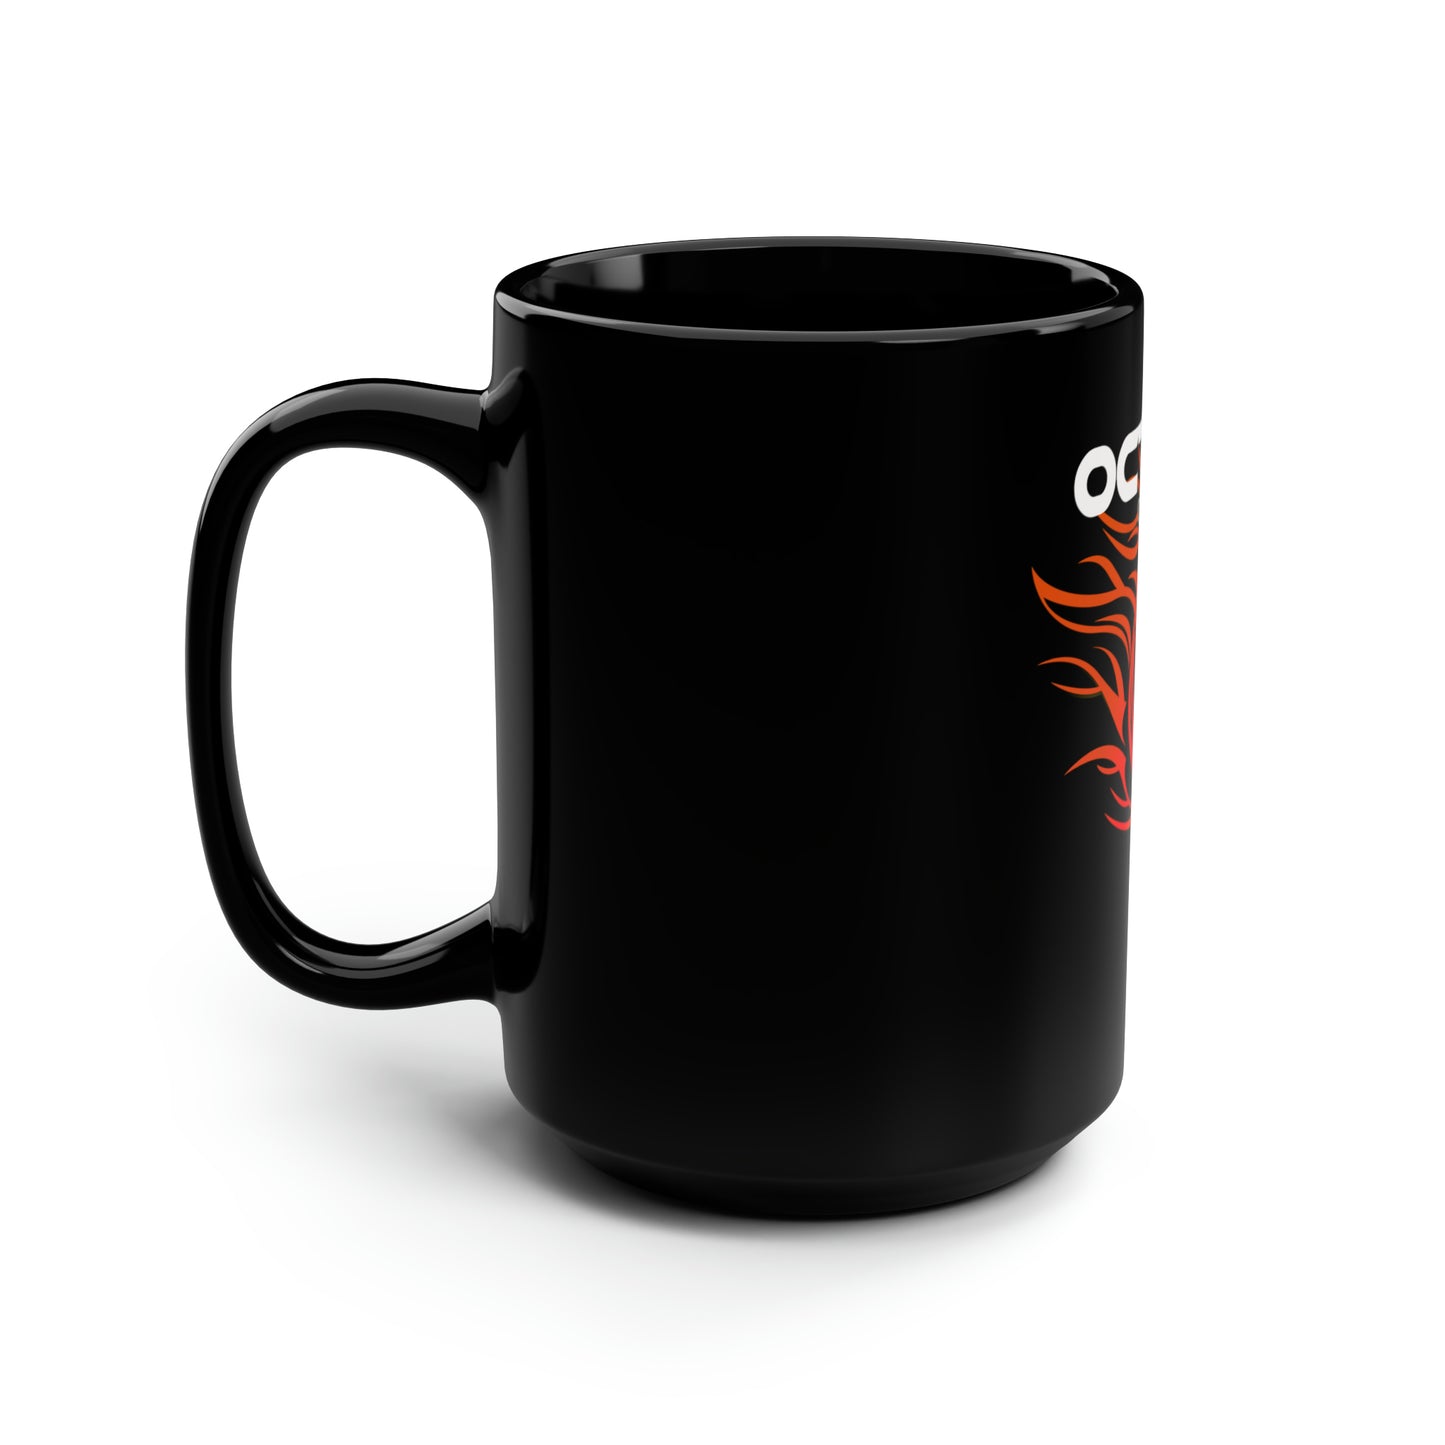 Octane 1/Black Mug, 15oz